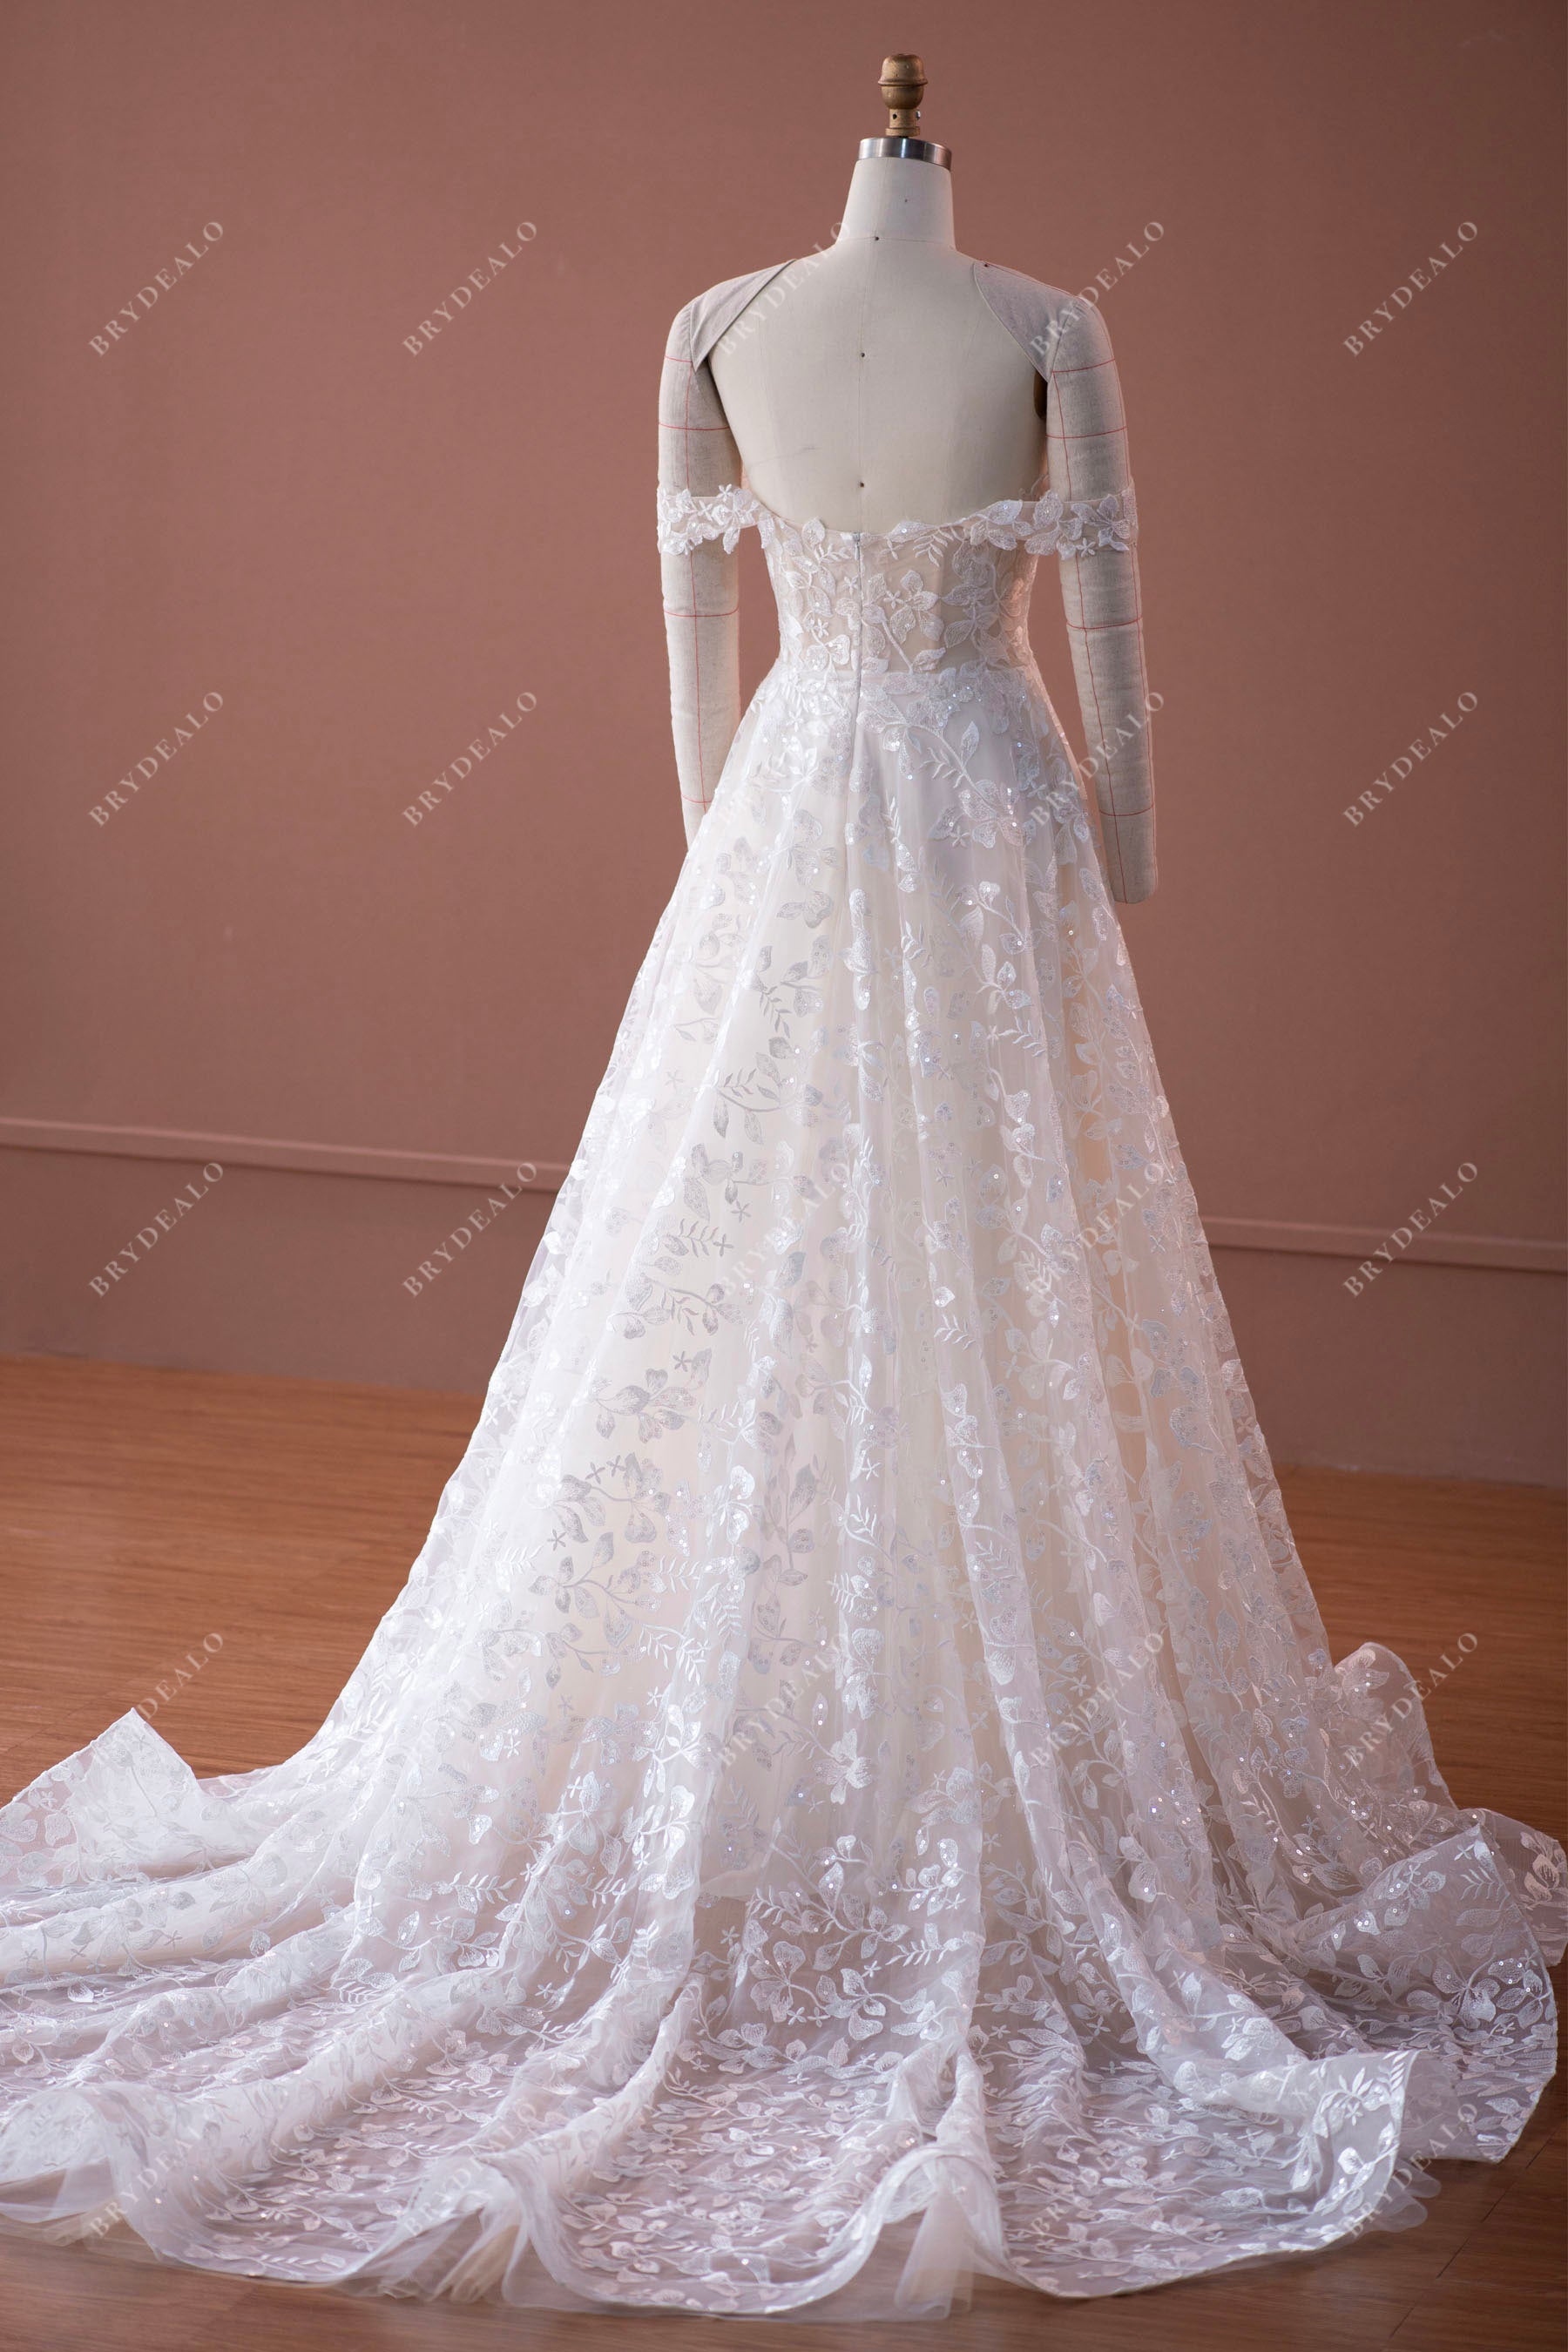 ruffled hem A-line lace wedding dress